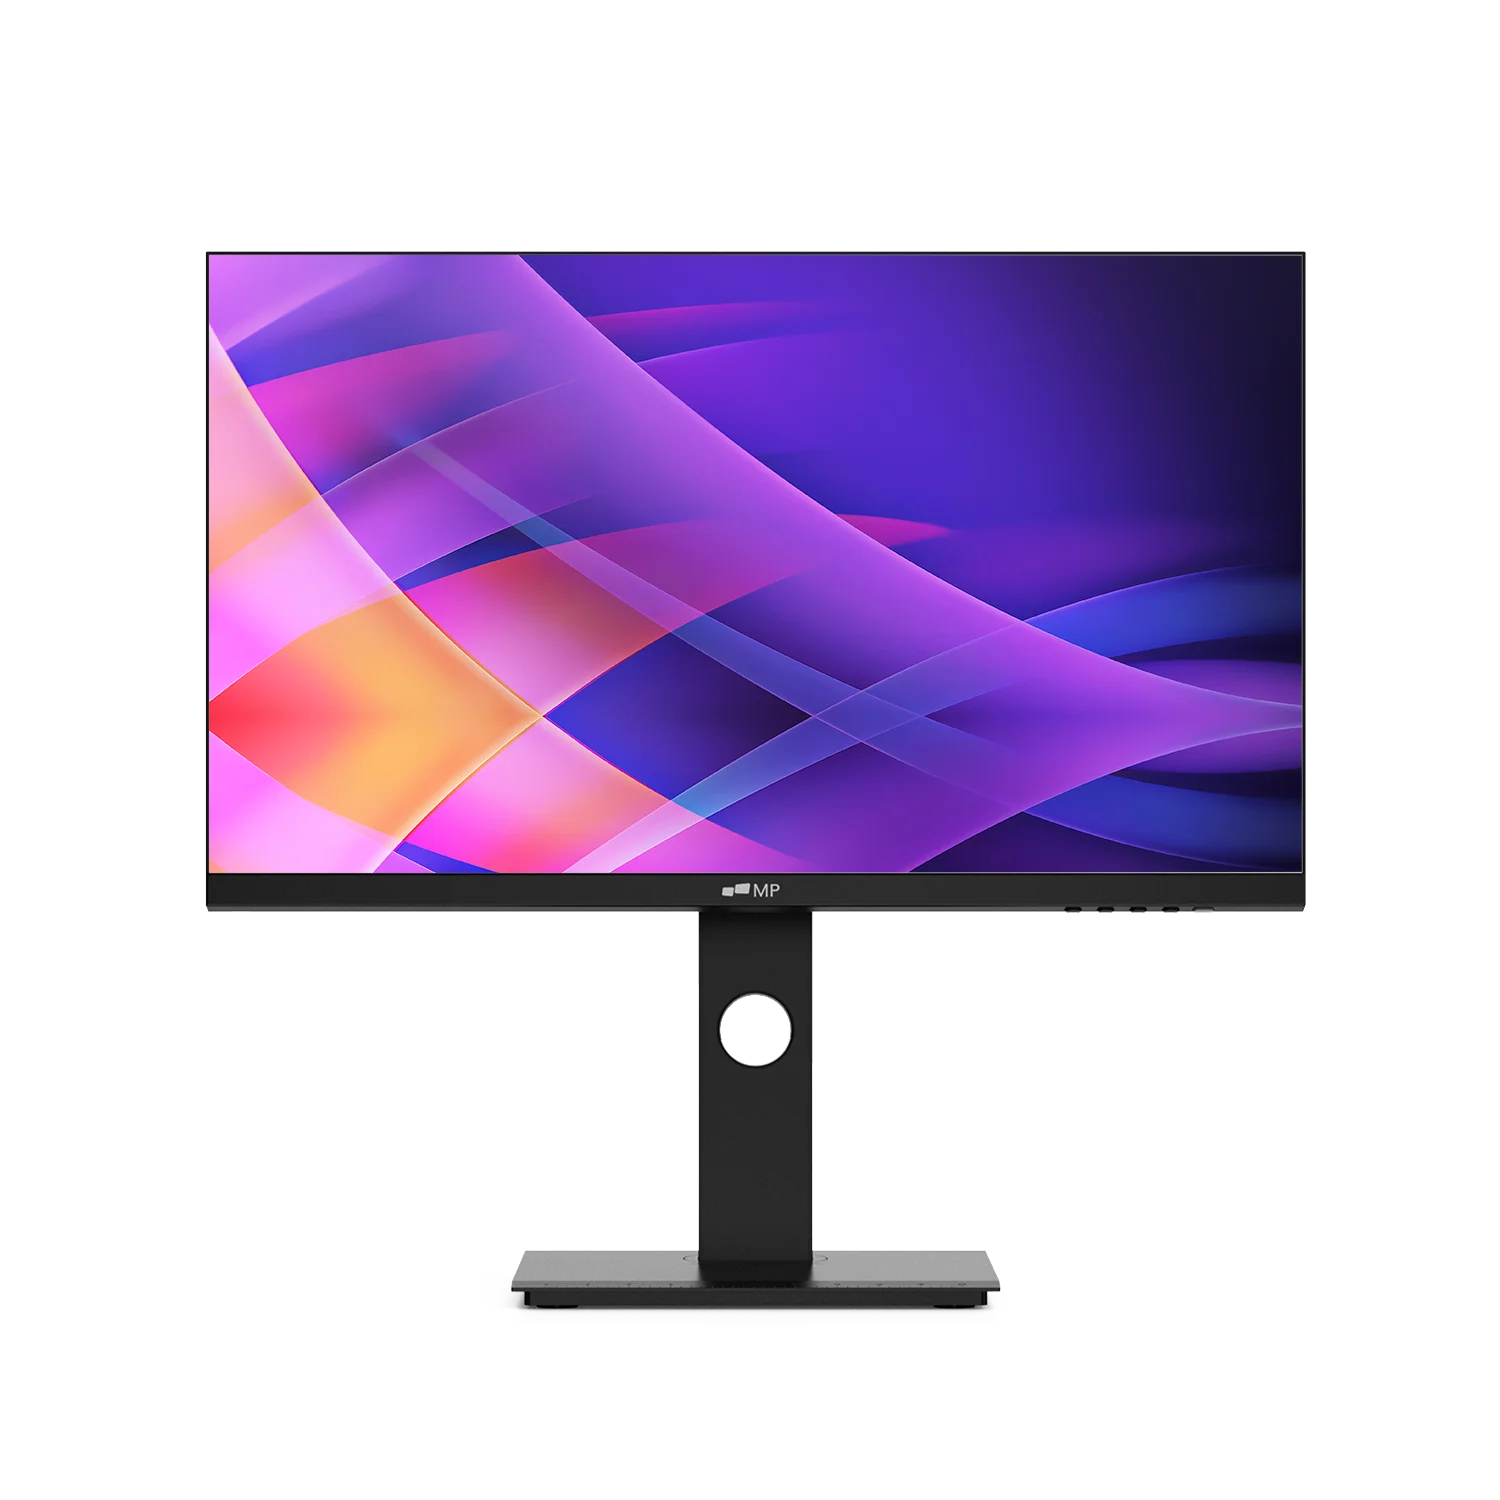 MP 24 inch desktop monitor